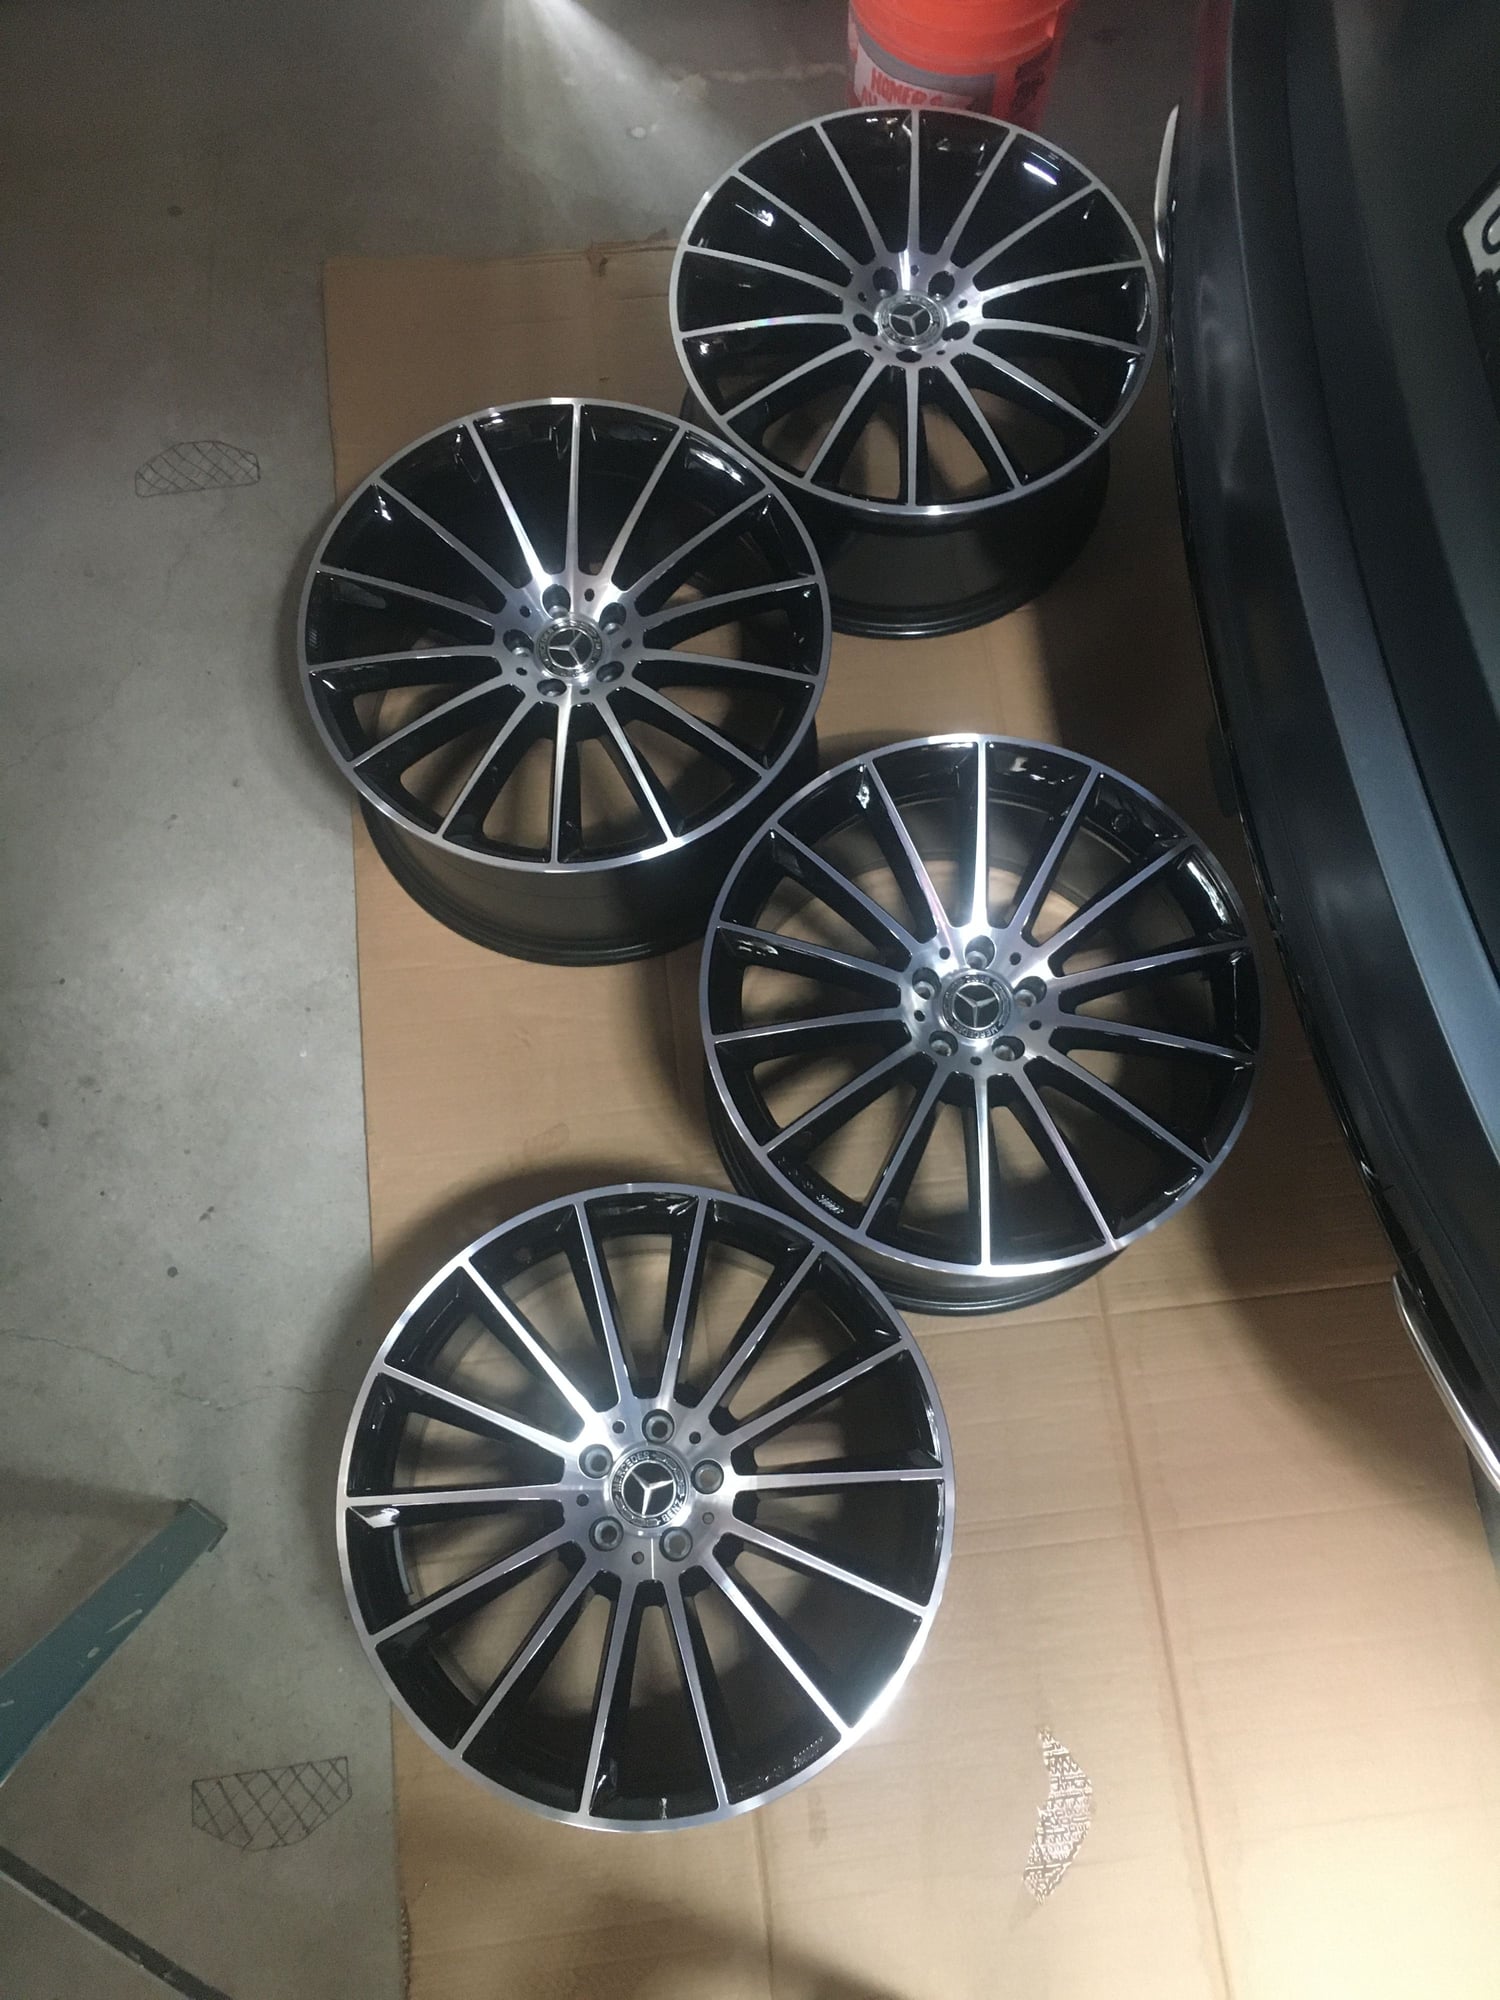 Wheels and Tires/Axles - 2021 GLE350/450 AMG 21" multi spoke wheels - Used - 2020 to 2021 Mercedes-Benz GLE450 - Santa Barbara, CA 93117, United States